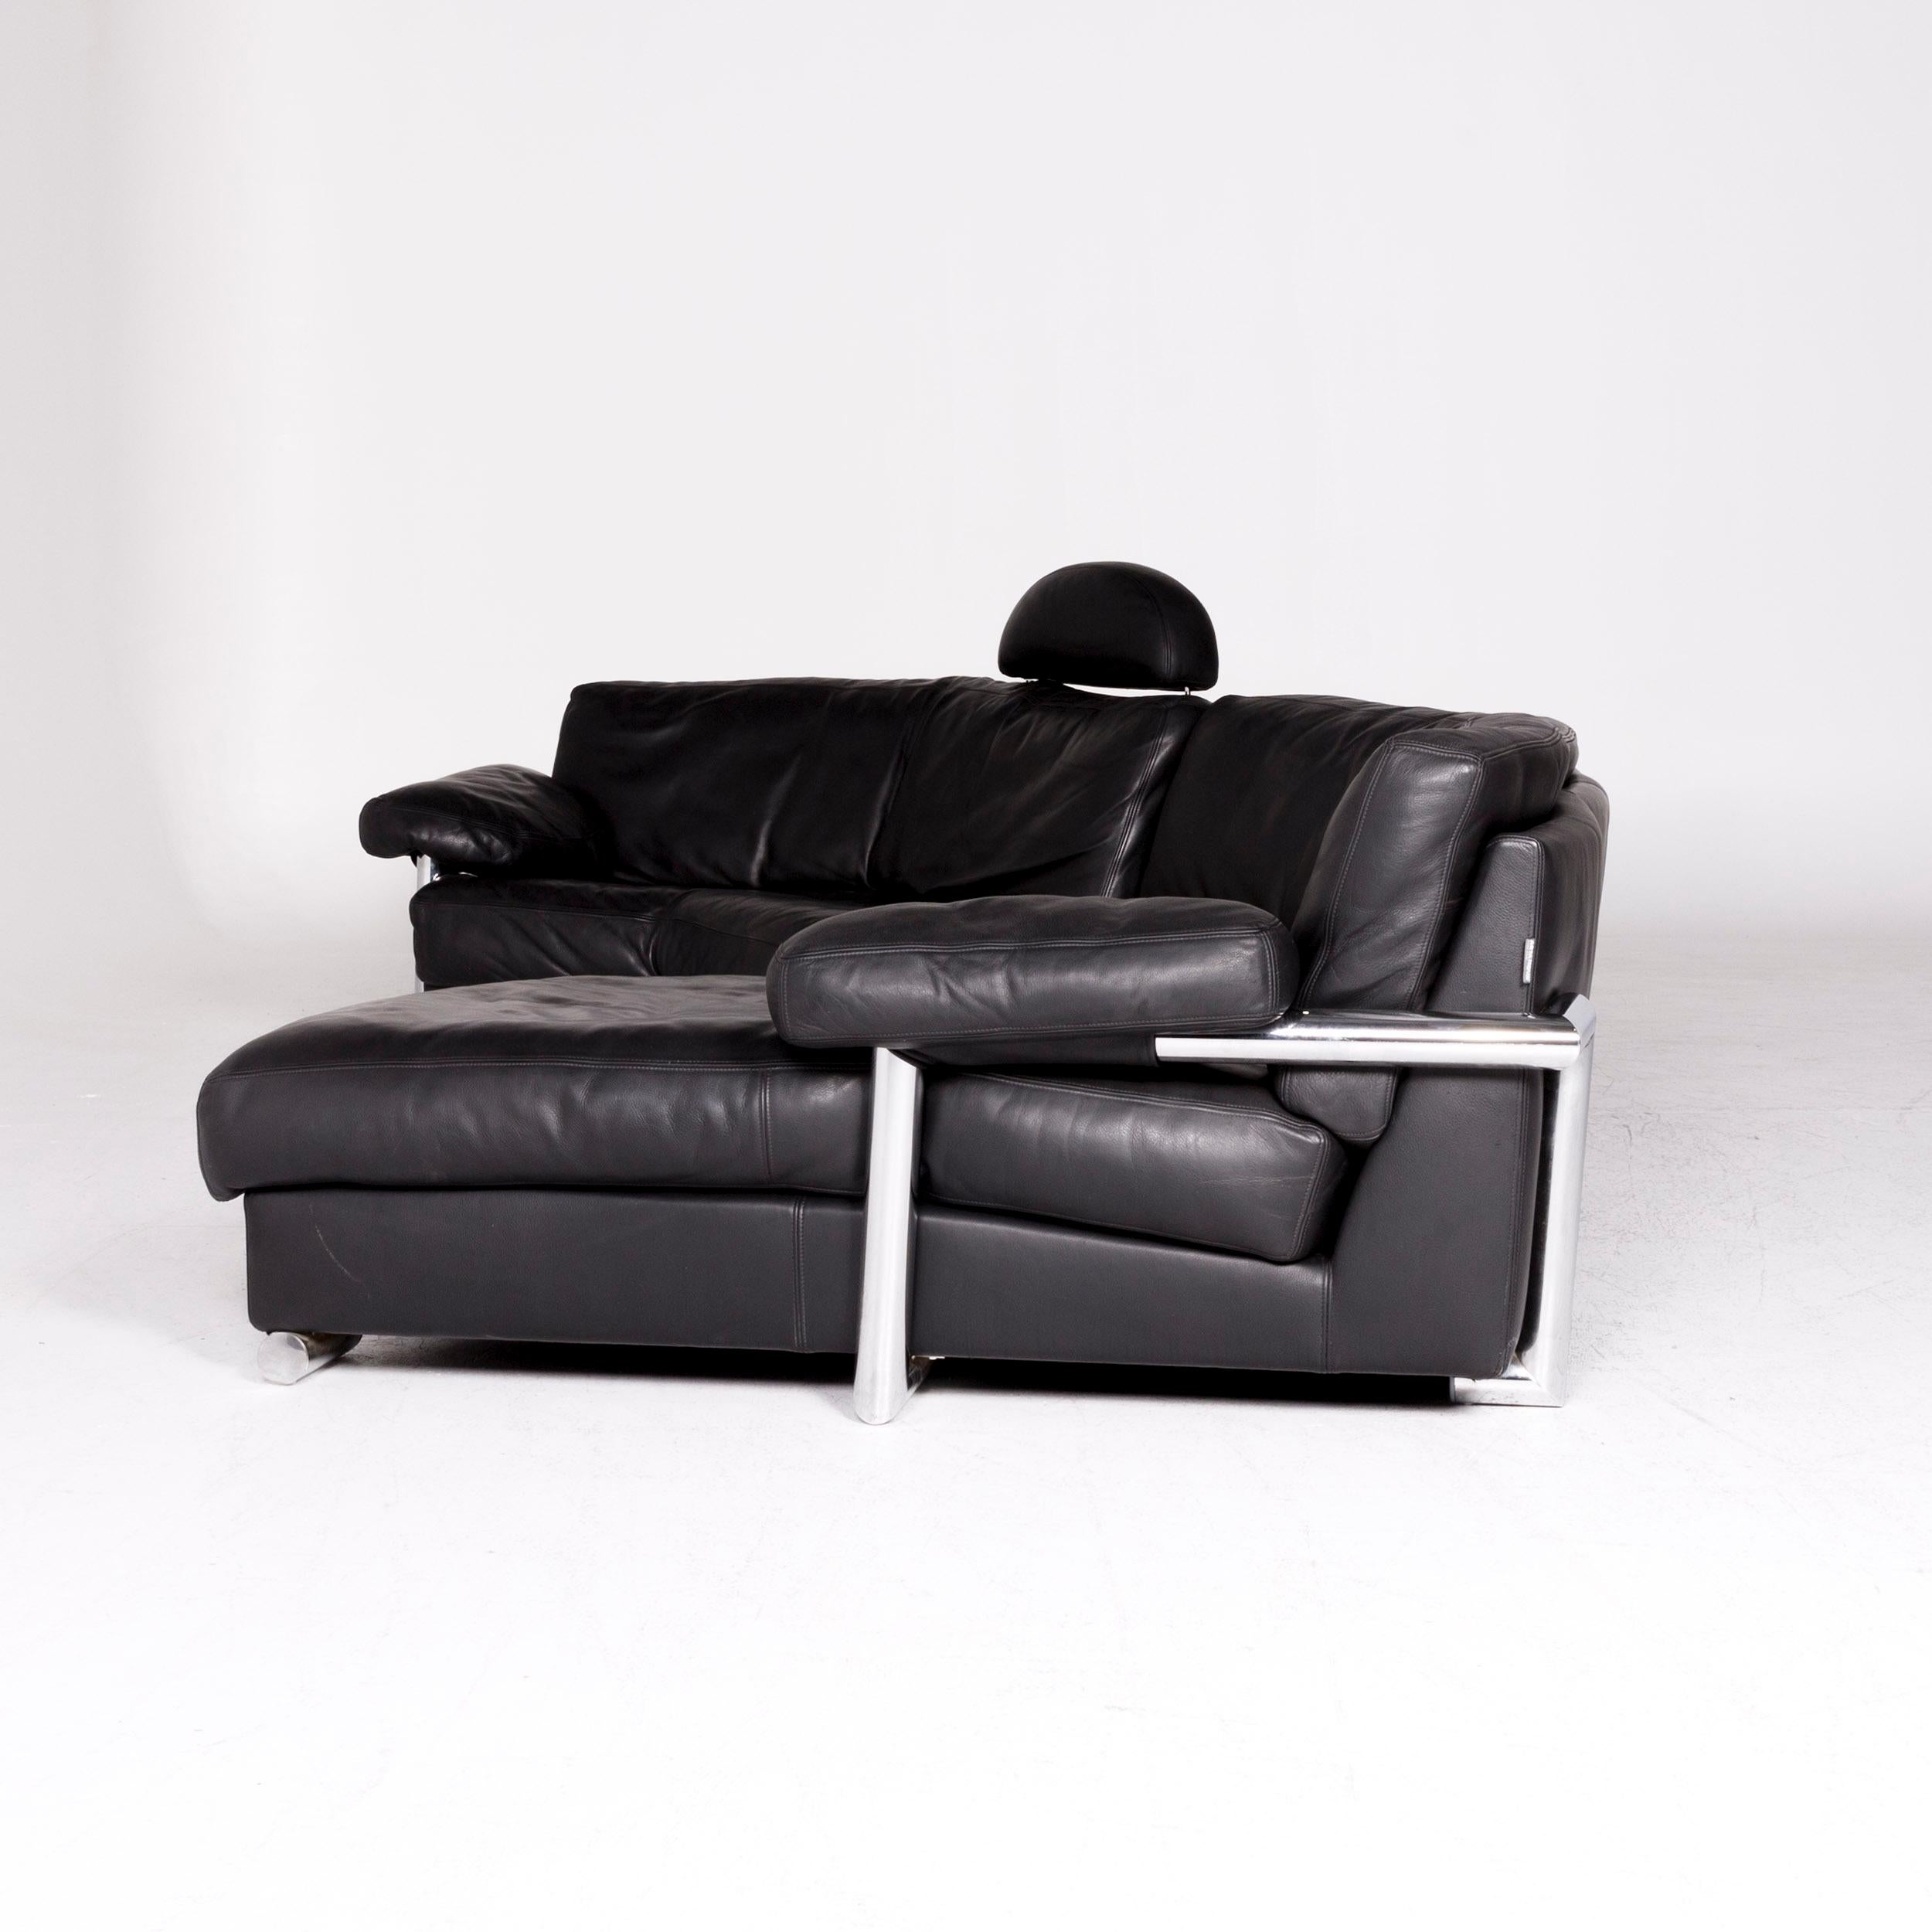 Artanova Medea Designer Leather Corner Sofa Black Genuine Leather Sofa Couch 3